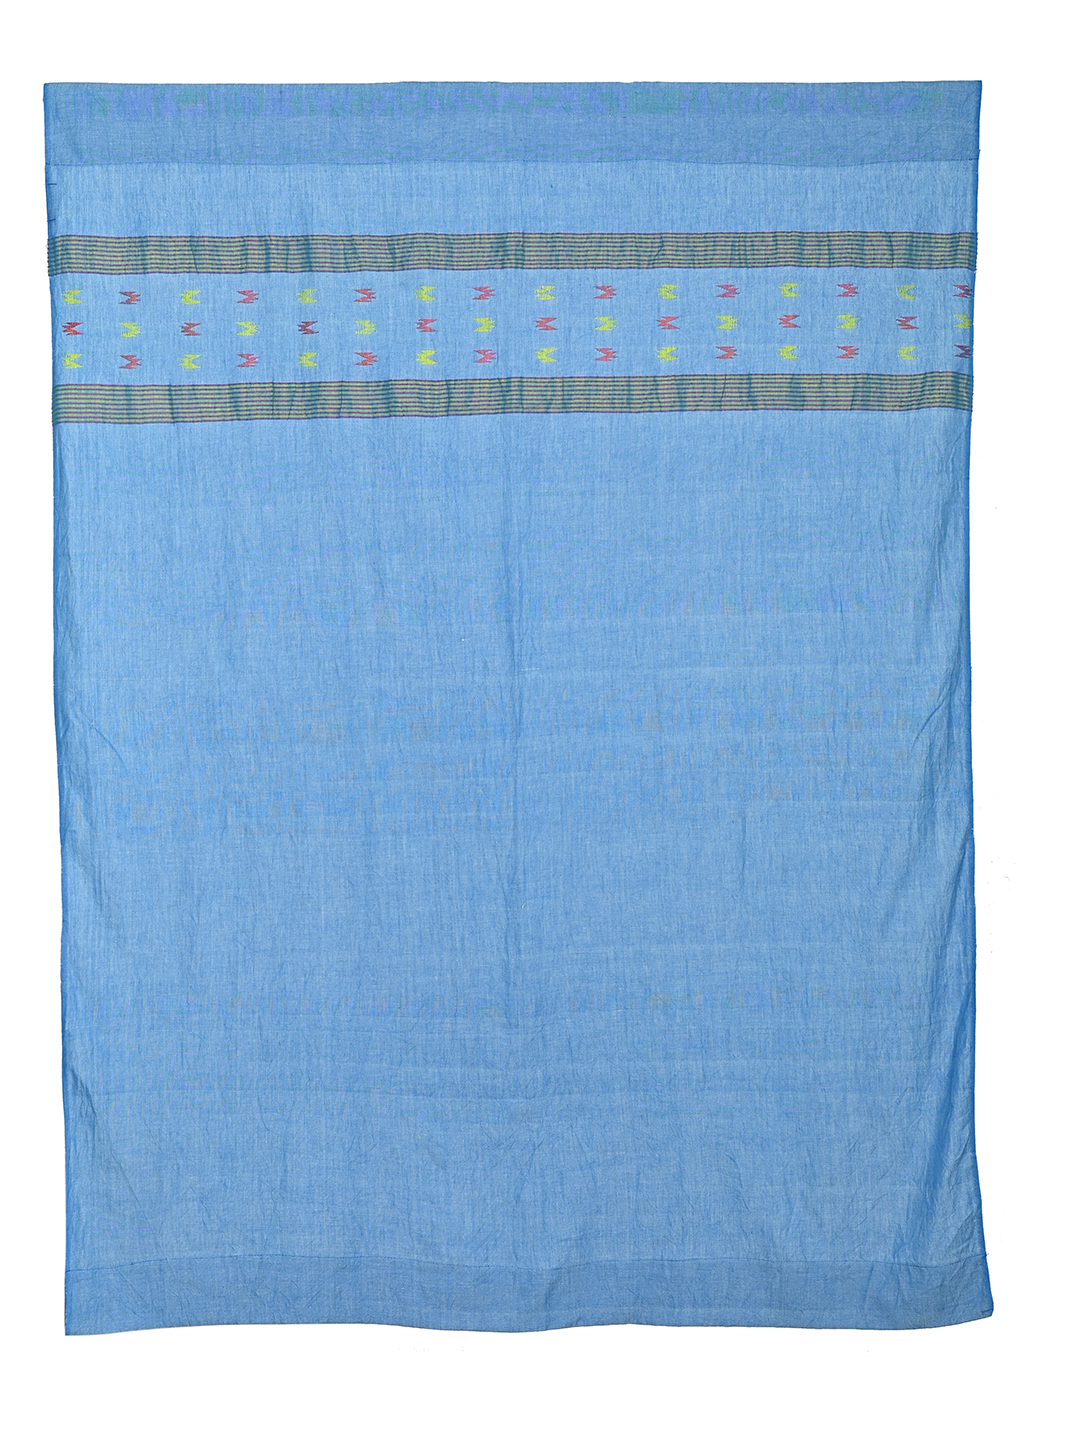 Indigo Blue Cotton Handloom Jamdani Window Curtain